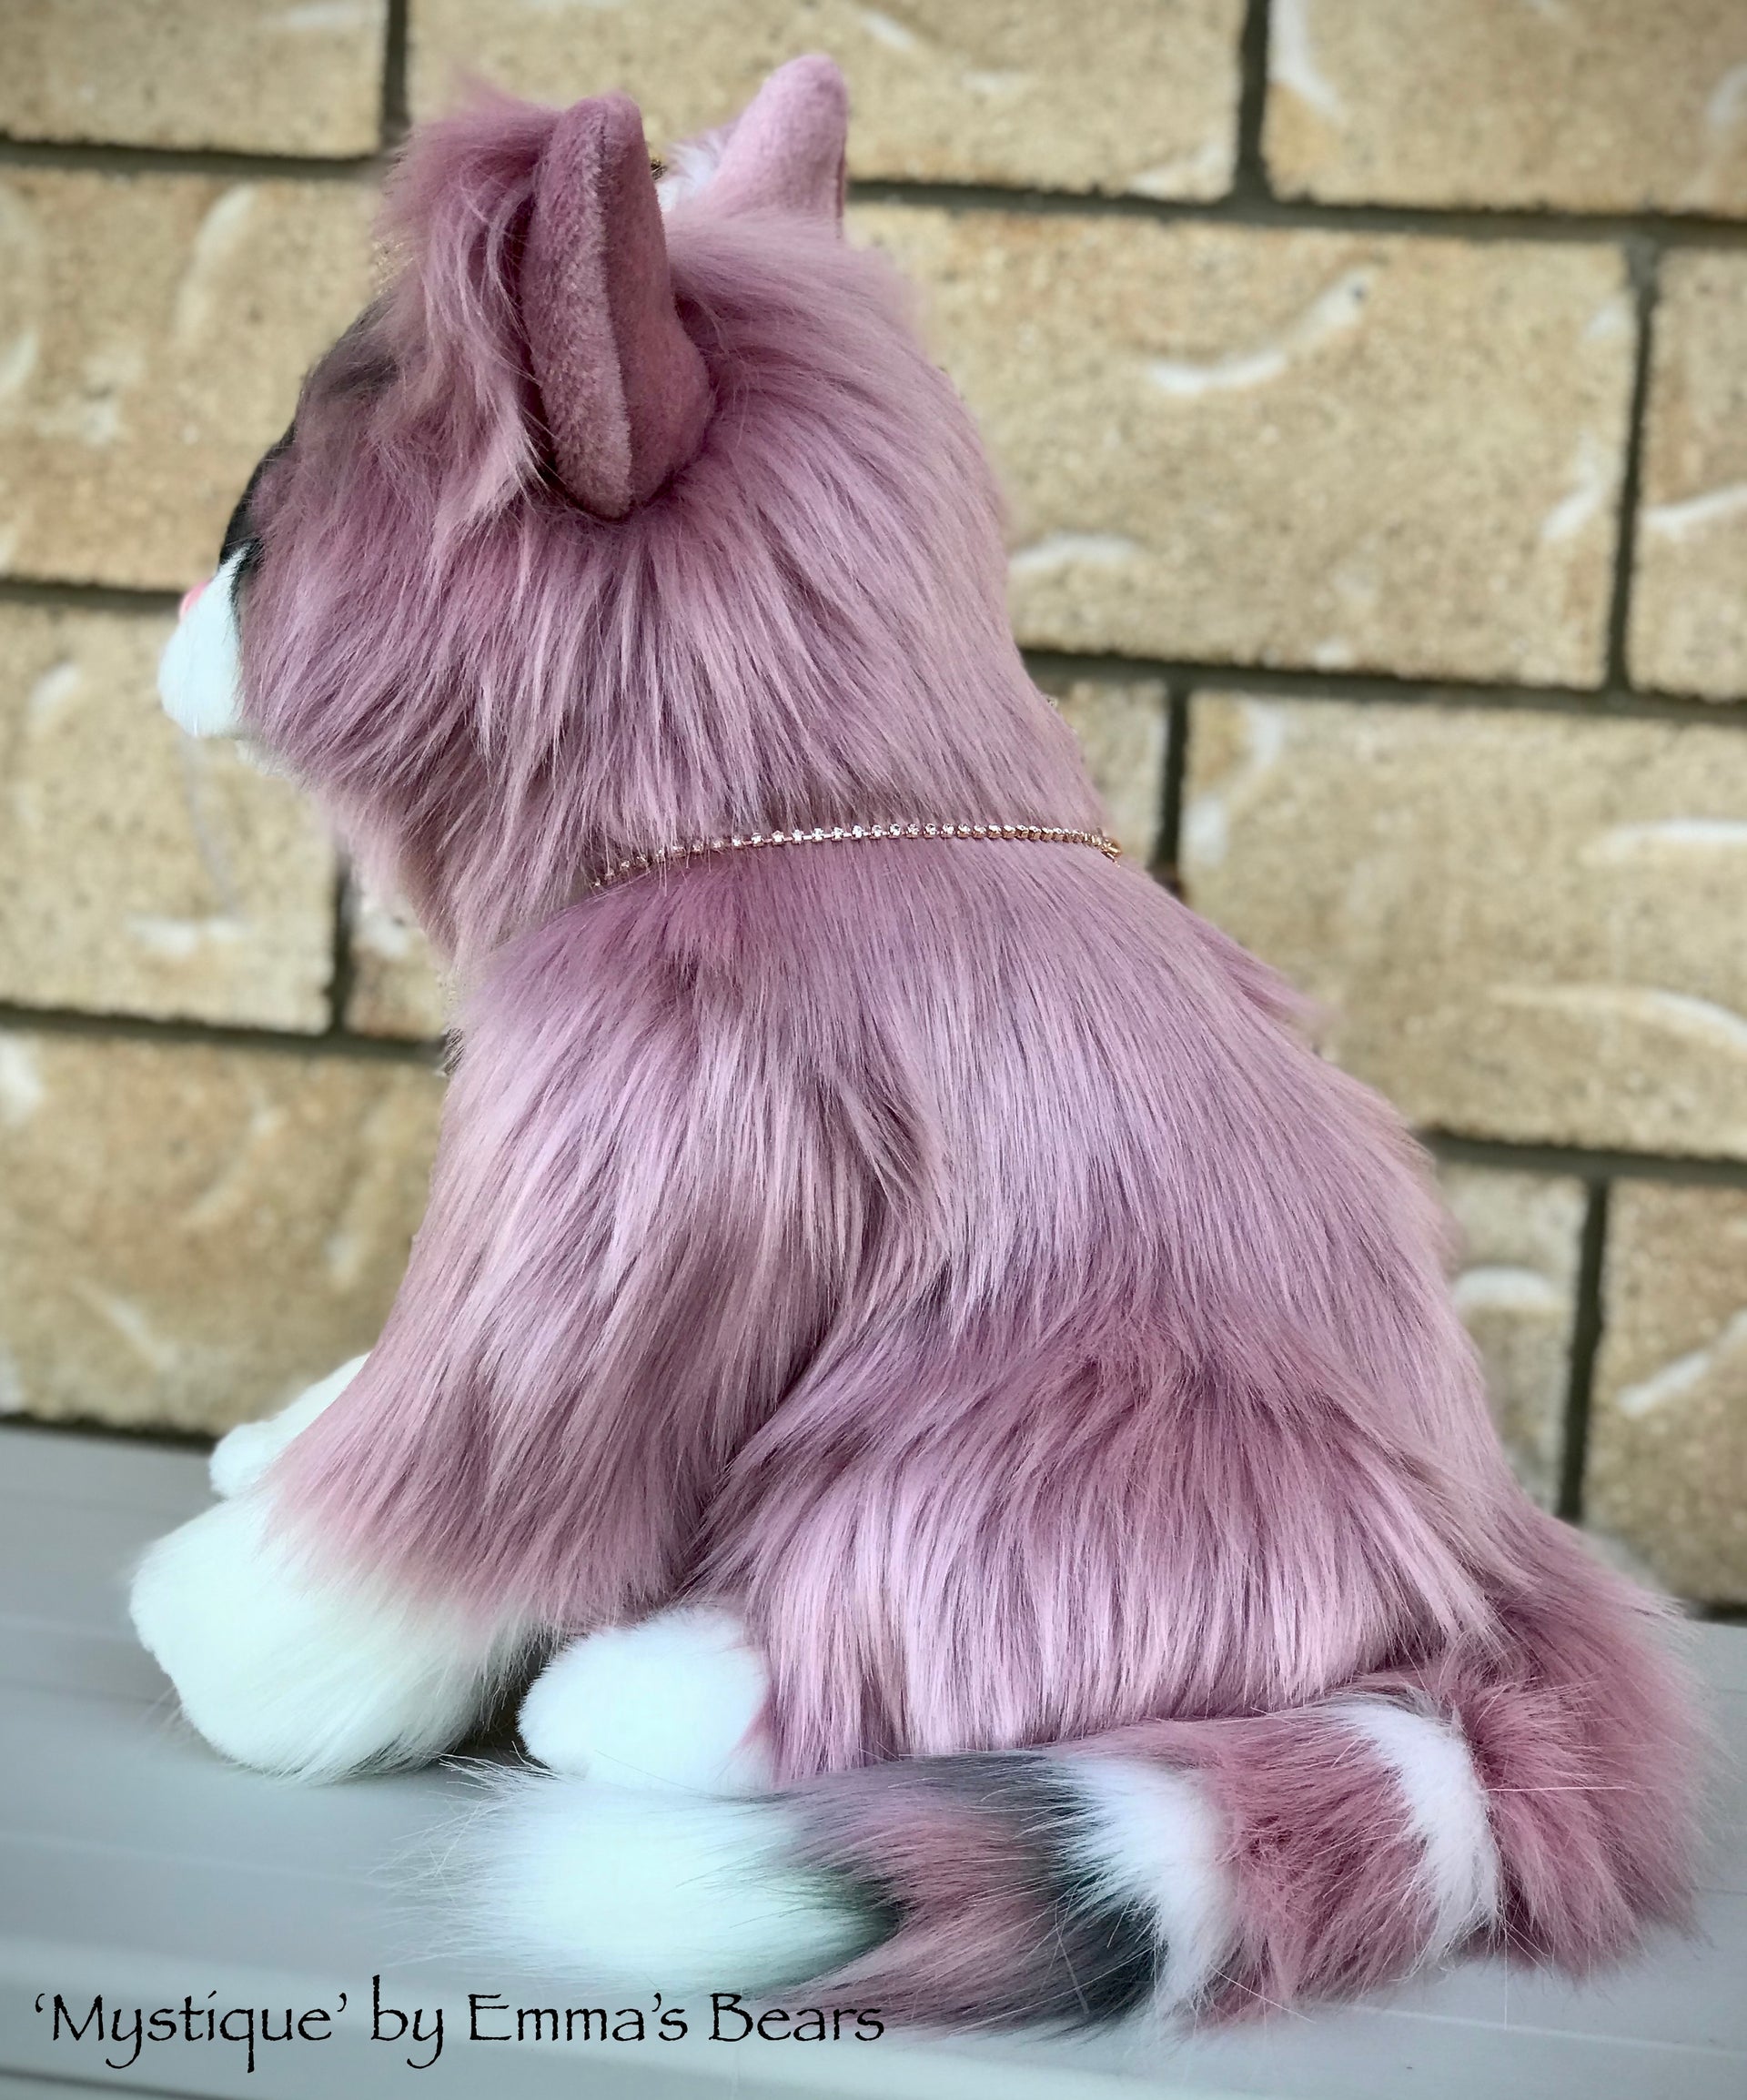 'Mystique' - life-size 15" faux fur artist cat by Emma's Bears